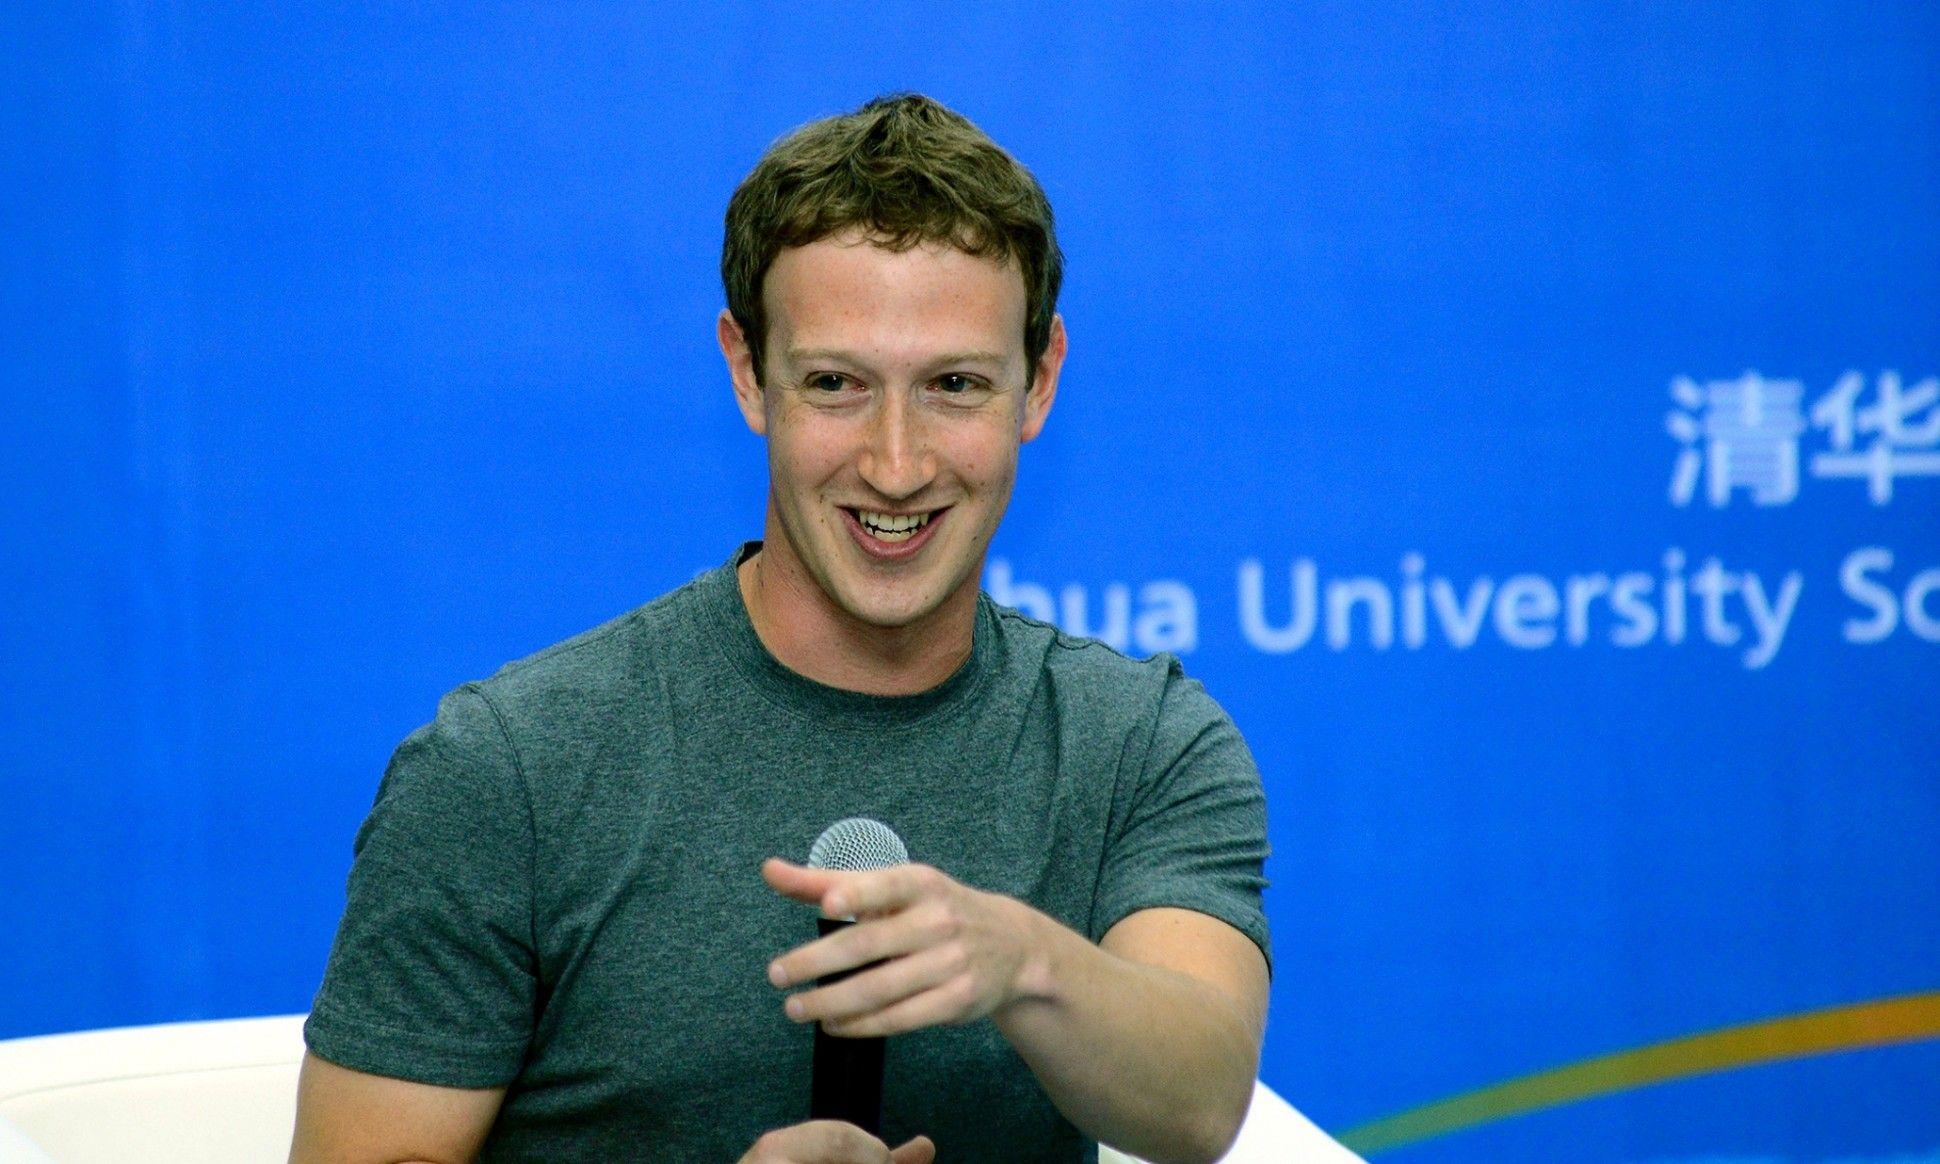 Awesome Mark Zuckerberg HD Wallpaper Free Download